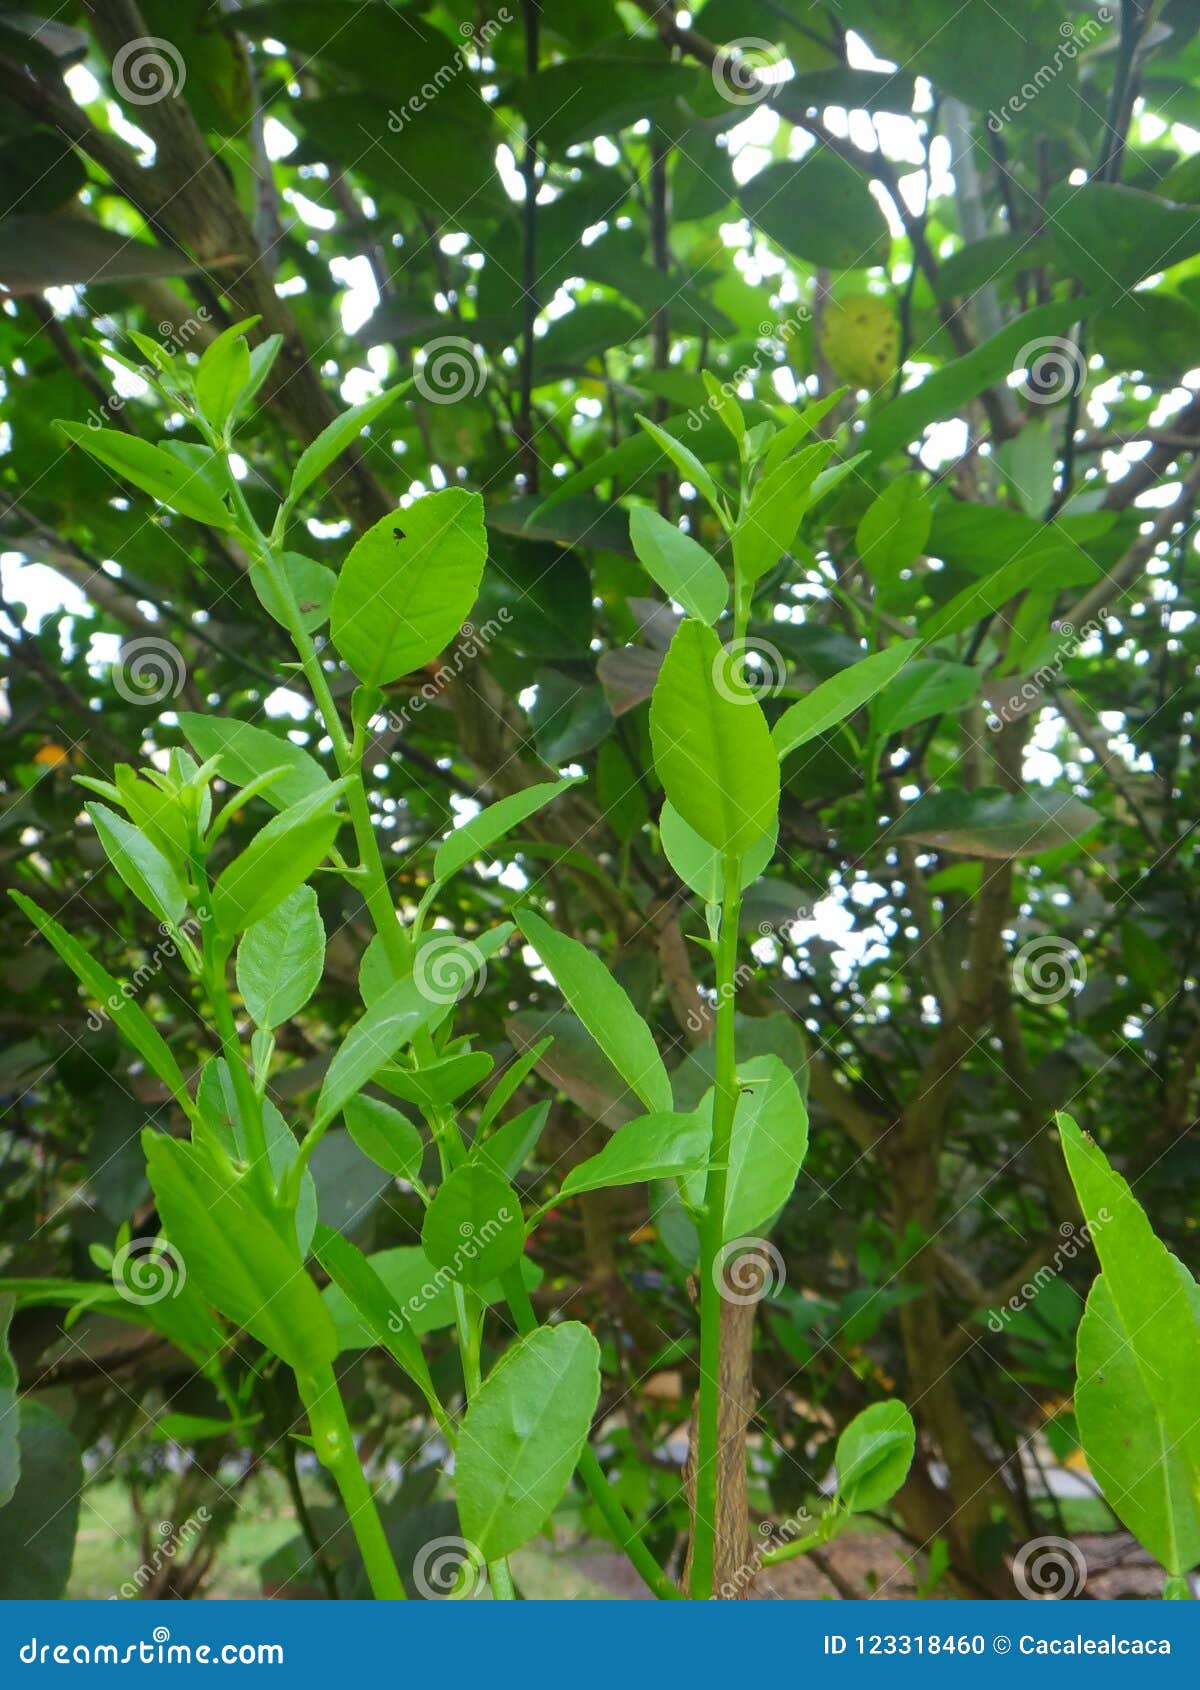 sprout of lemon plant